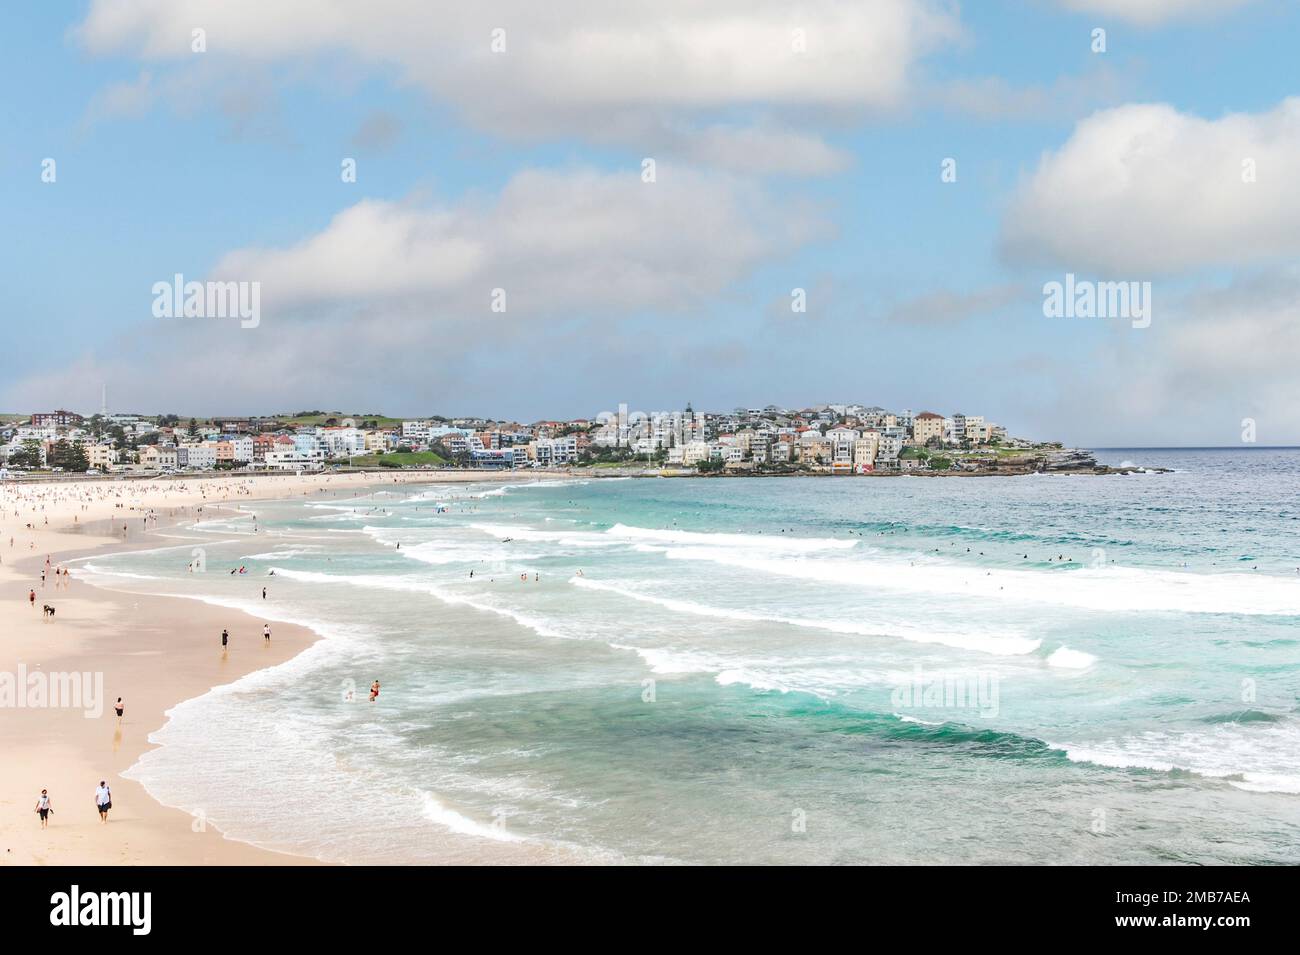 Bondi Beach, Sydney  Australia - February 2, 2017: View of the beach. Bondi Beach is one of Australia’s most iconic beaches. Stock Photo